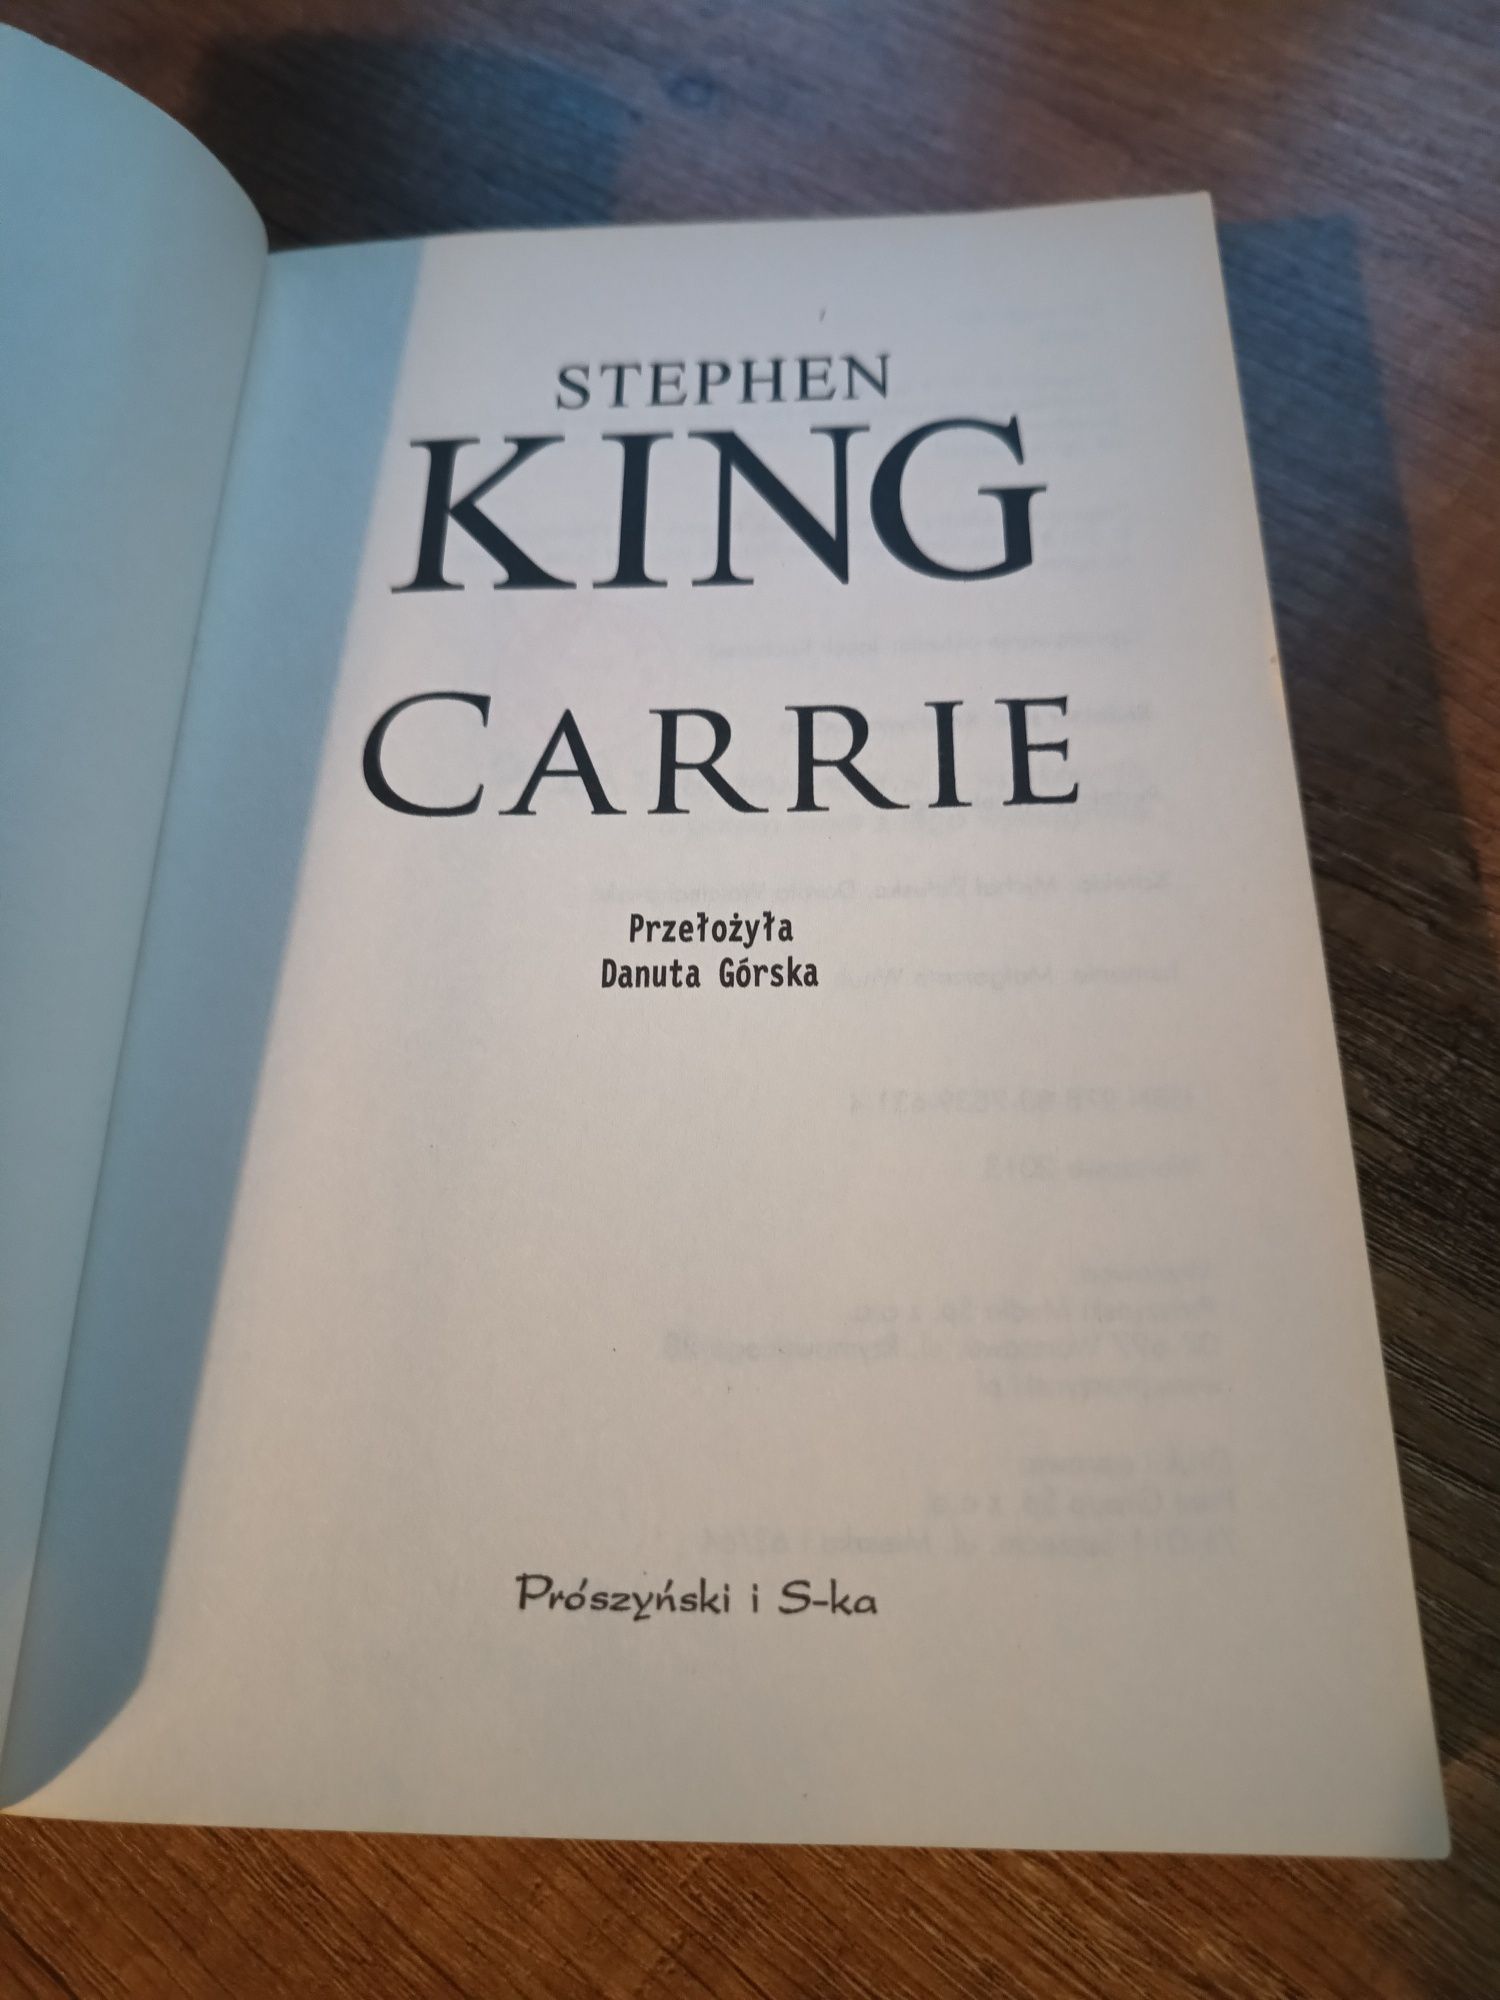 Stephen King CARRIE